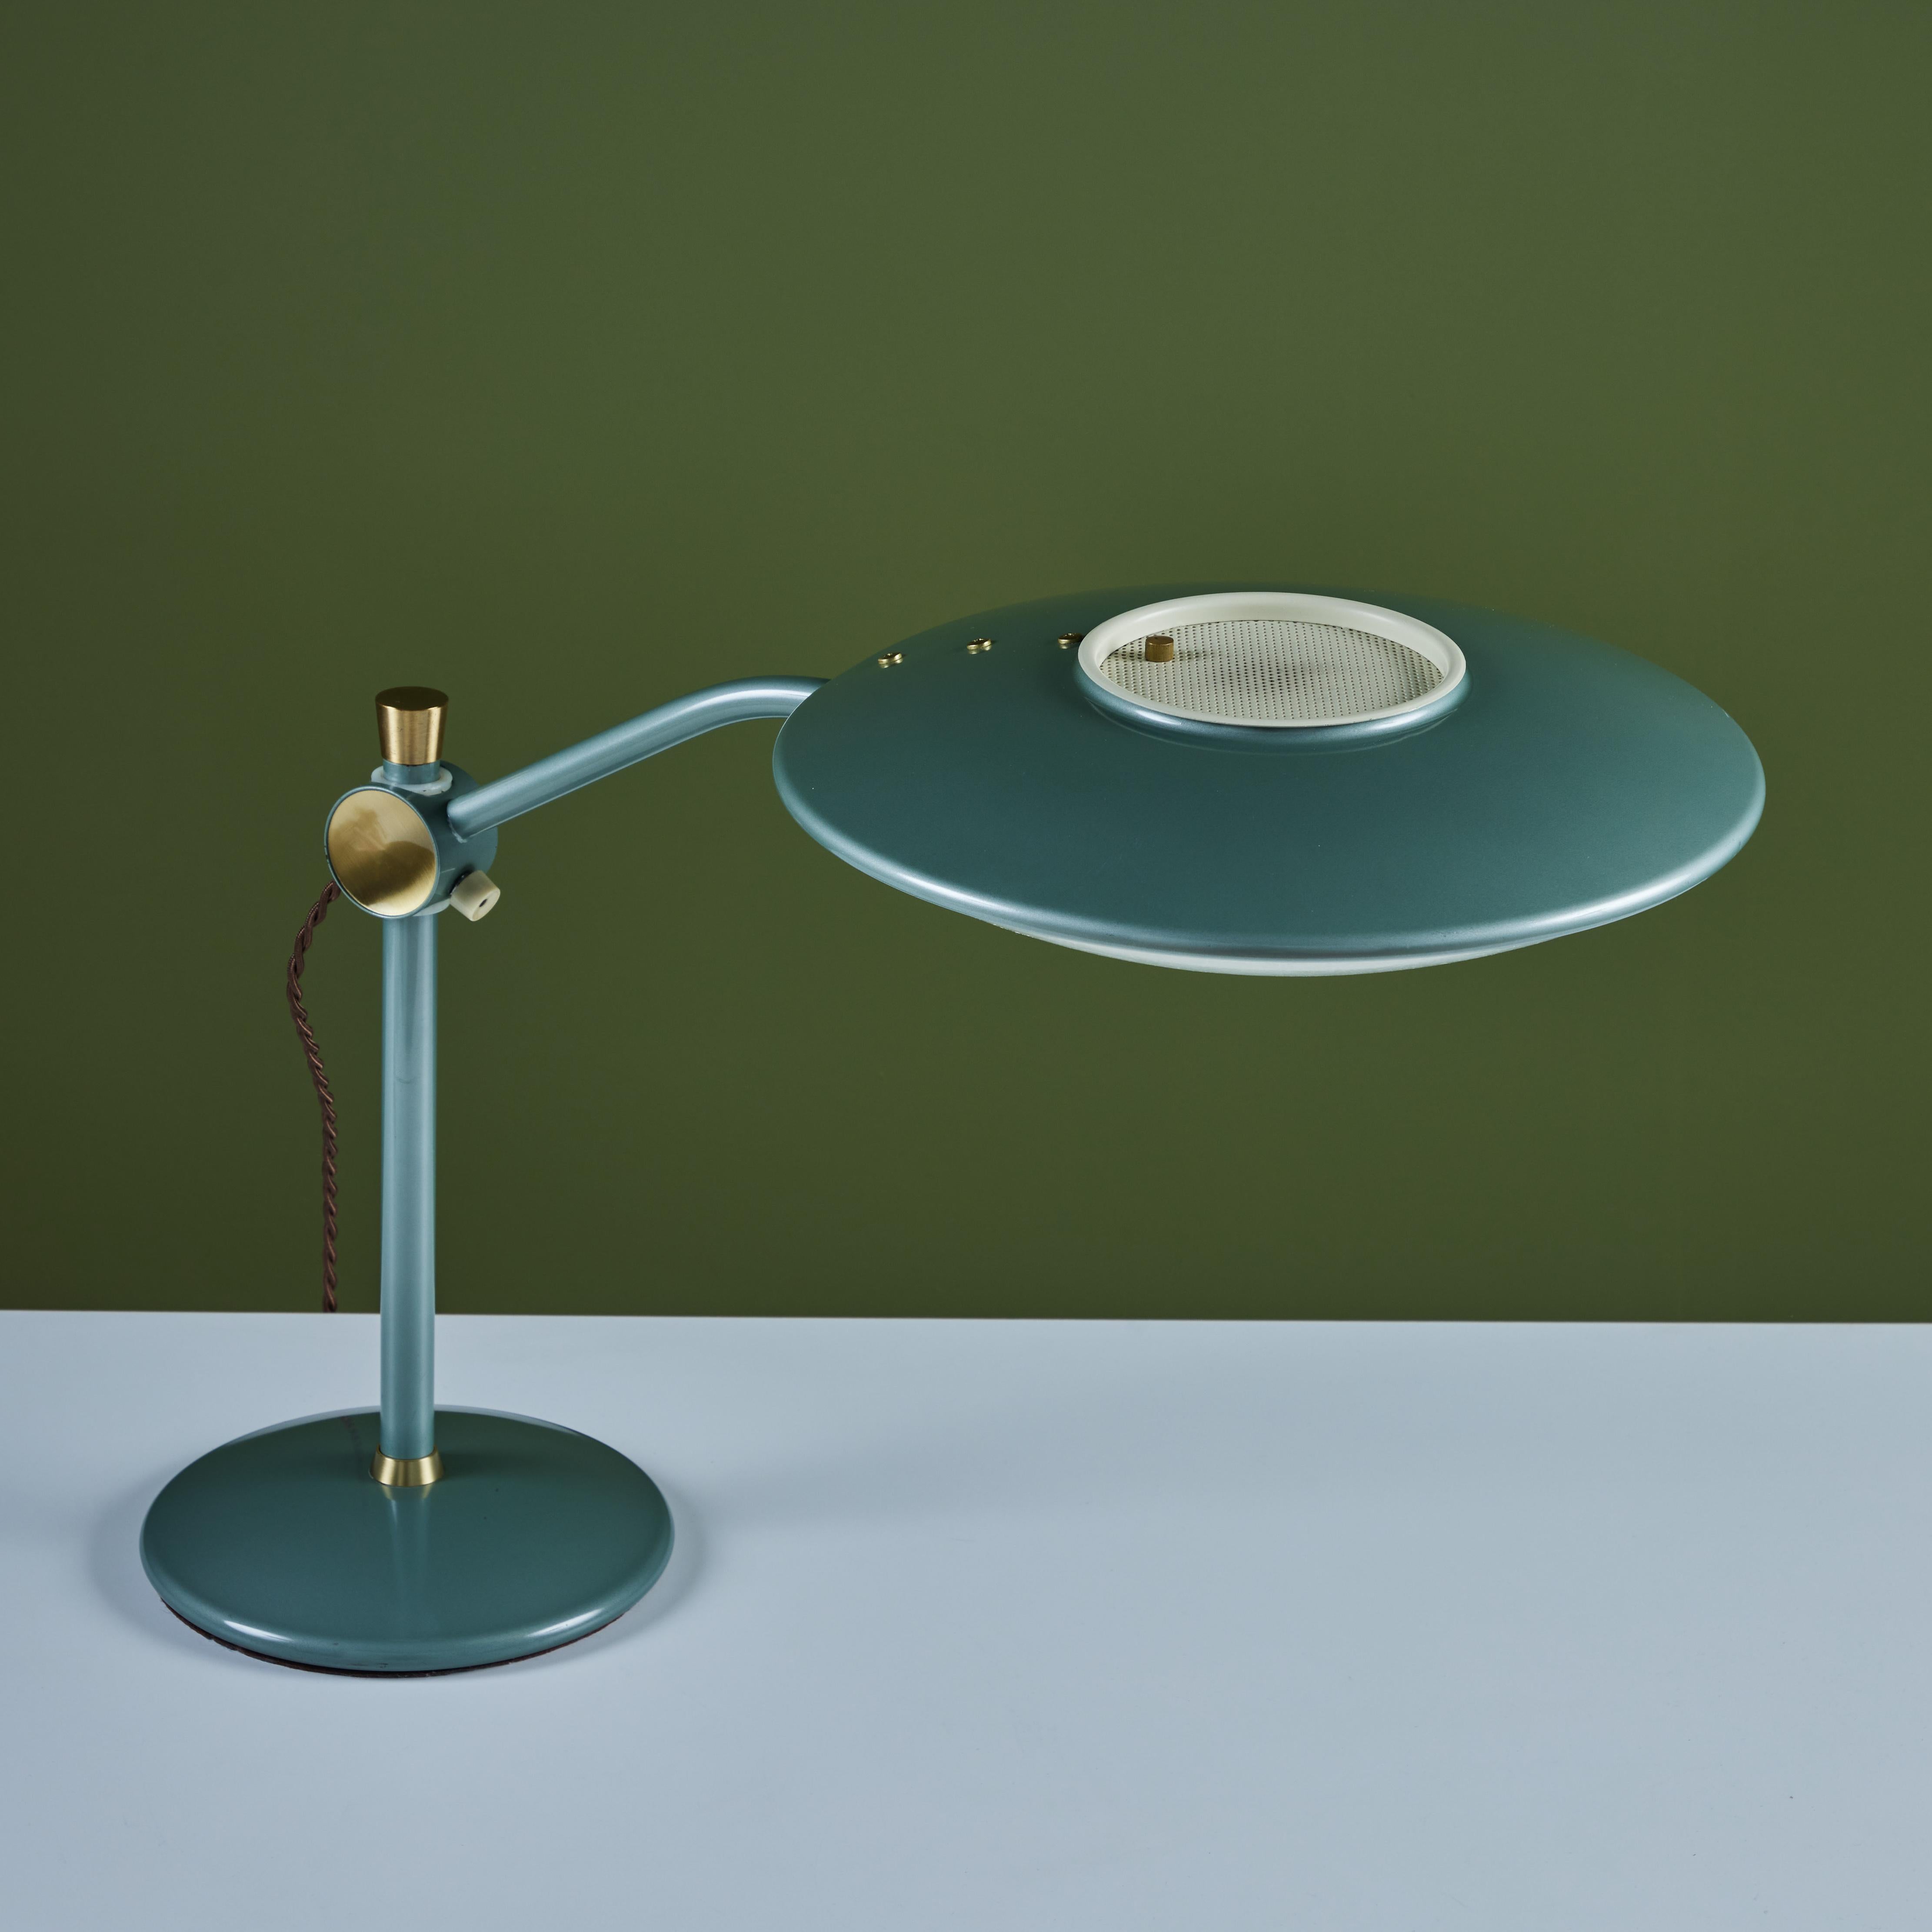 Enameled Dazor Green Enamel Desk Lamp with Brass Accents